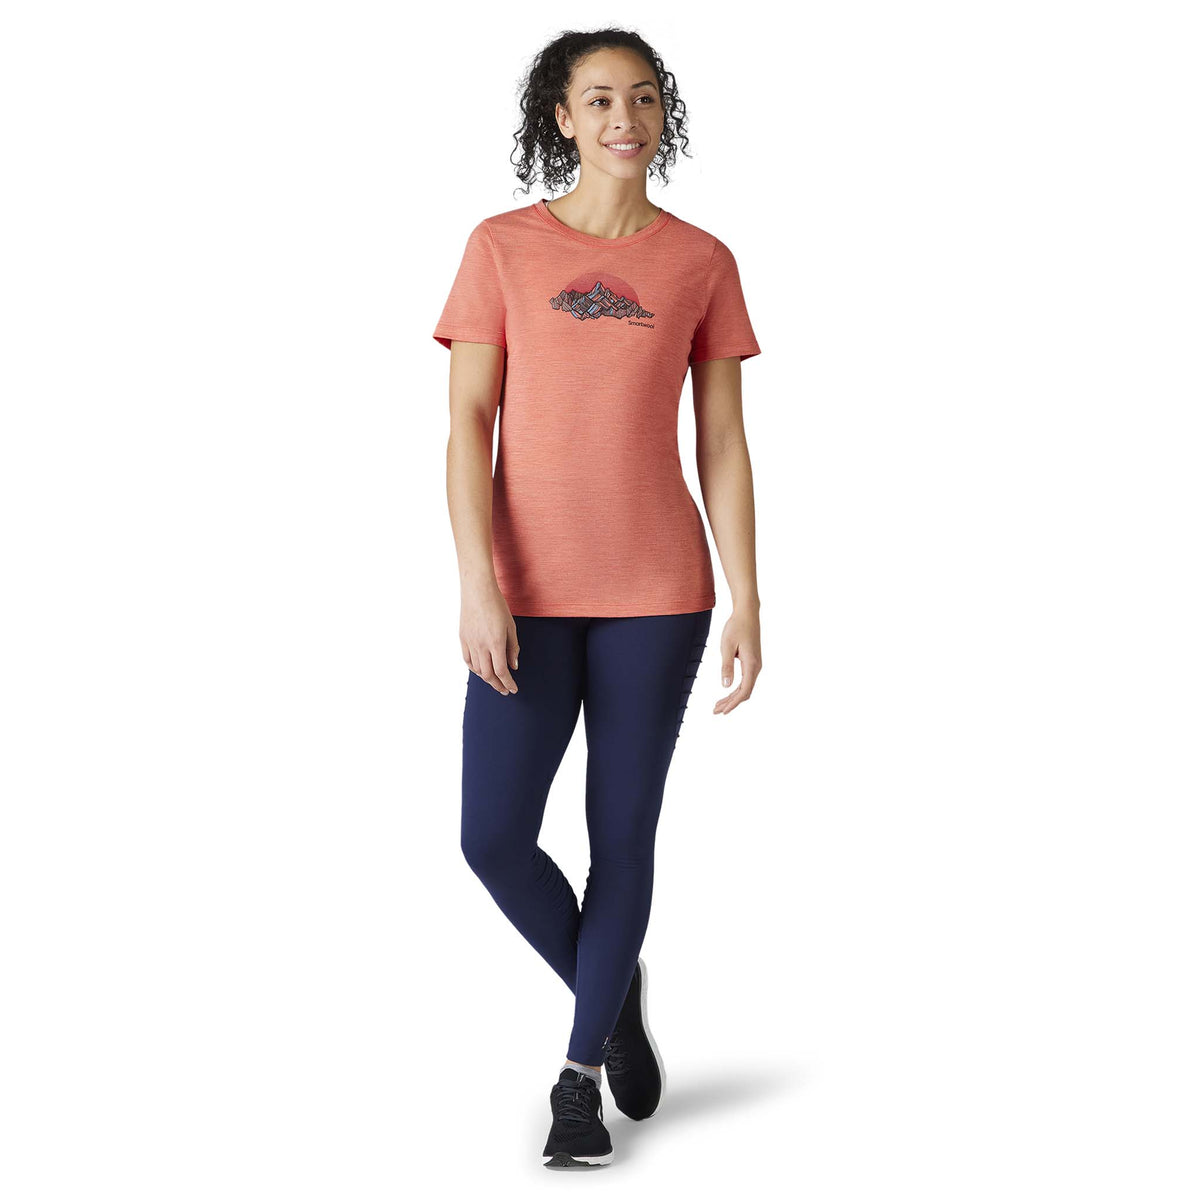 Smartwool Merino Sport 150 Mt. Rainier Graphic t-shirt sunset coral heather femme face